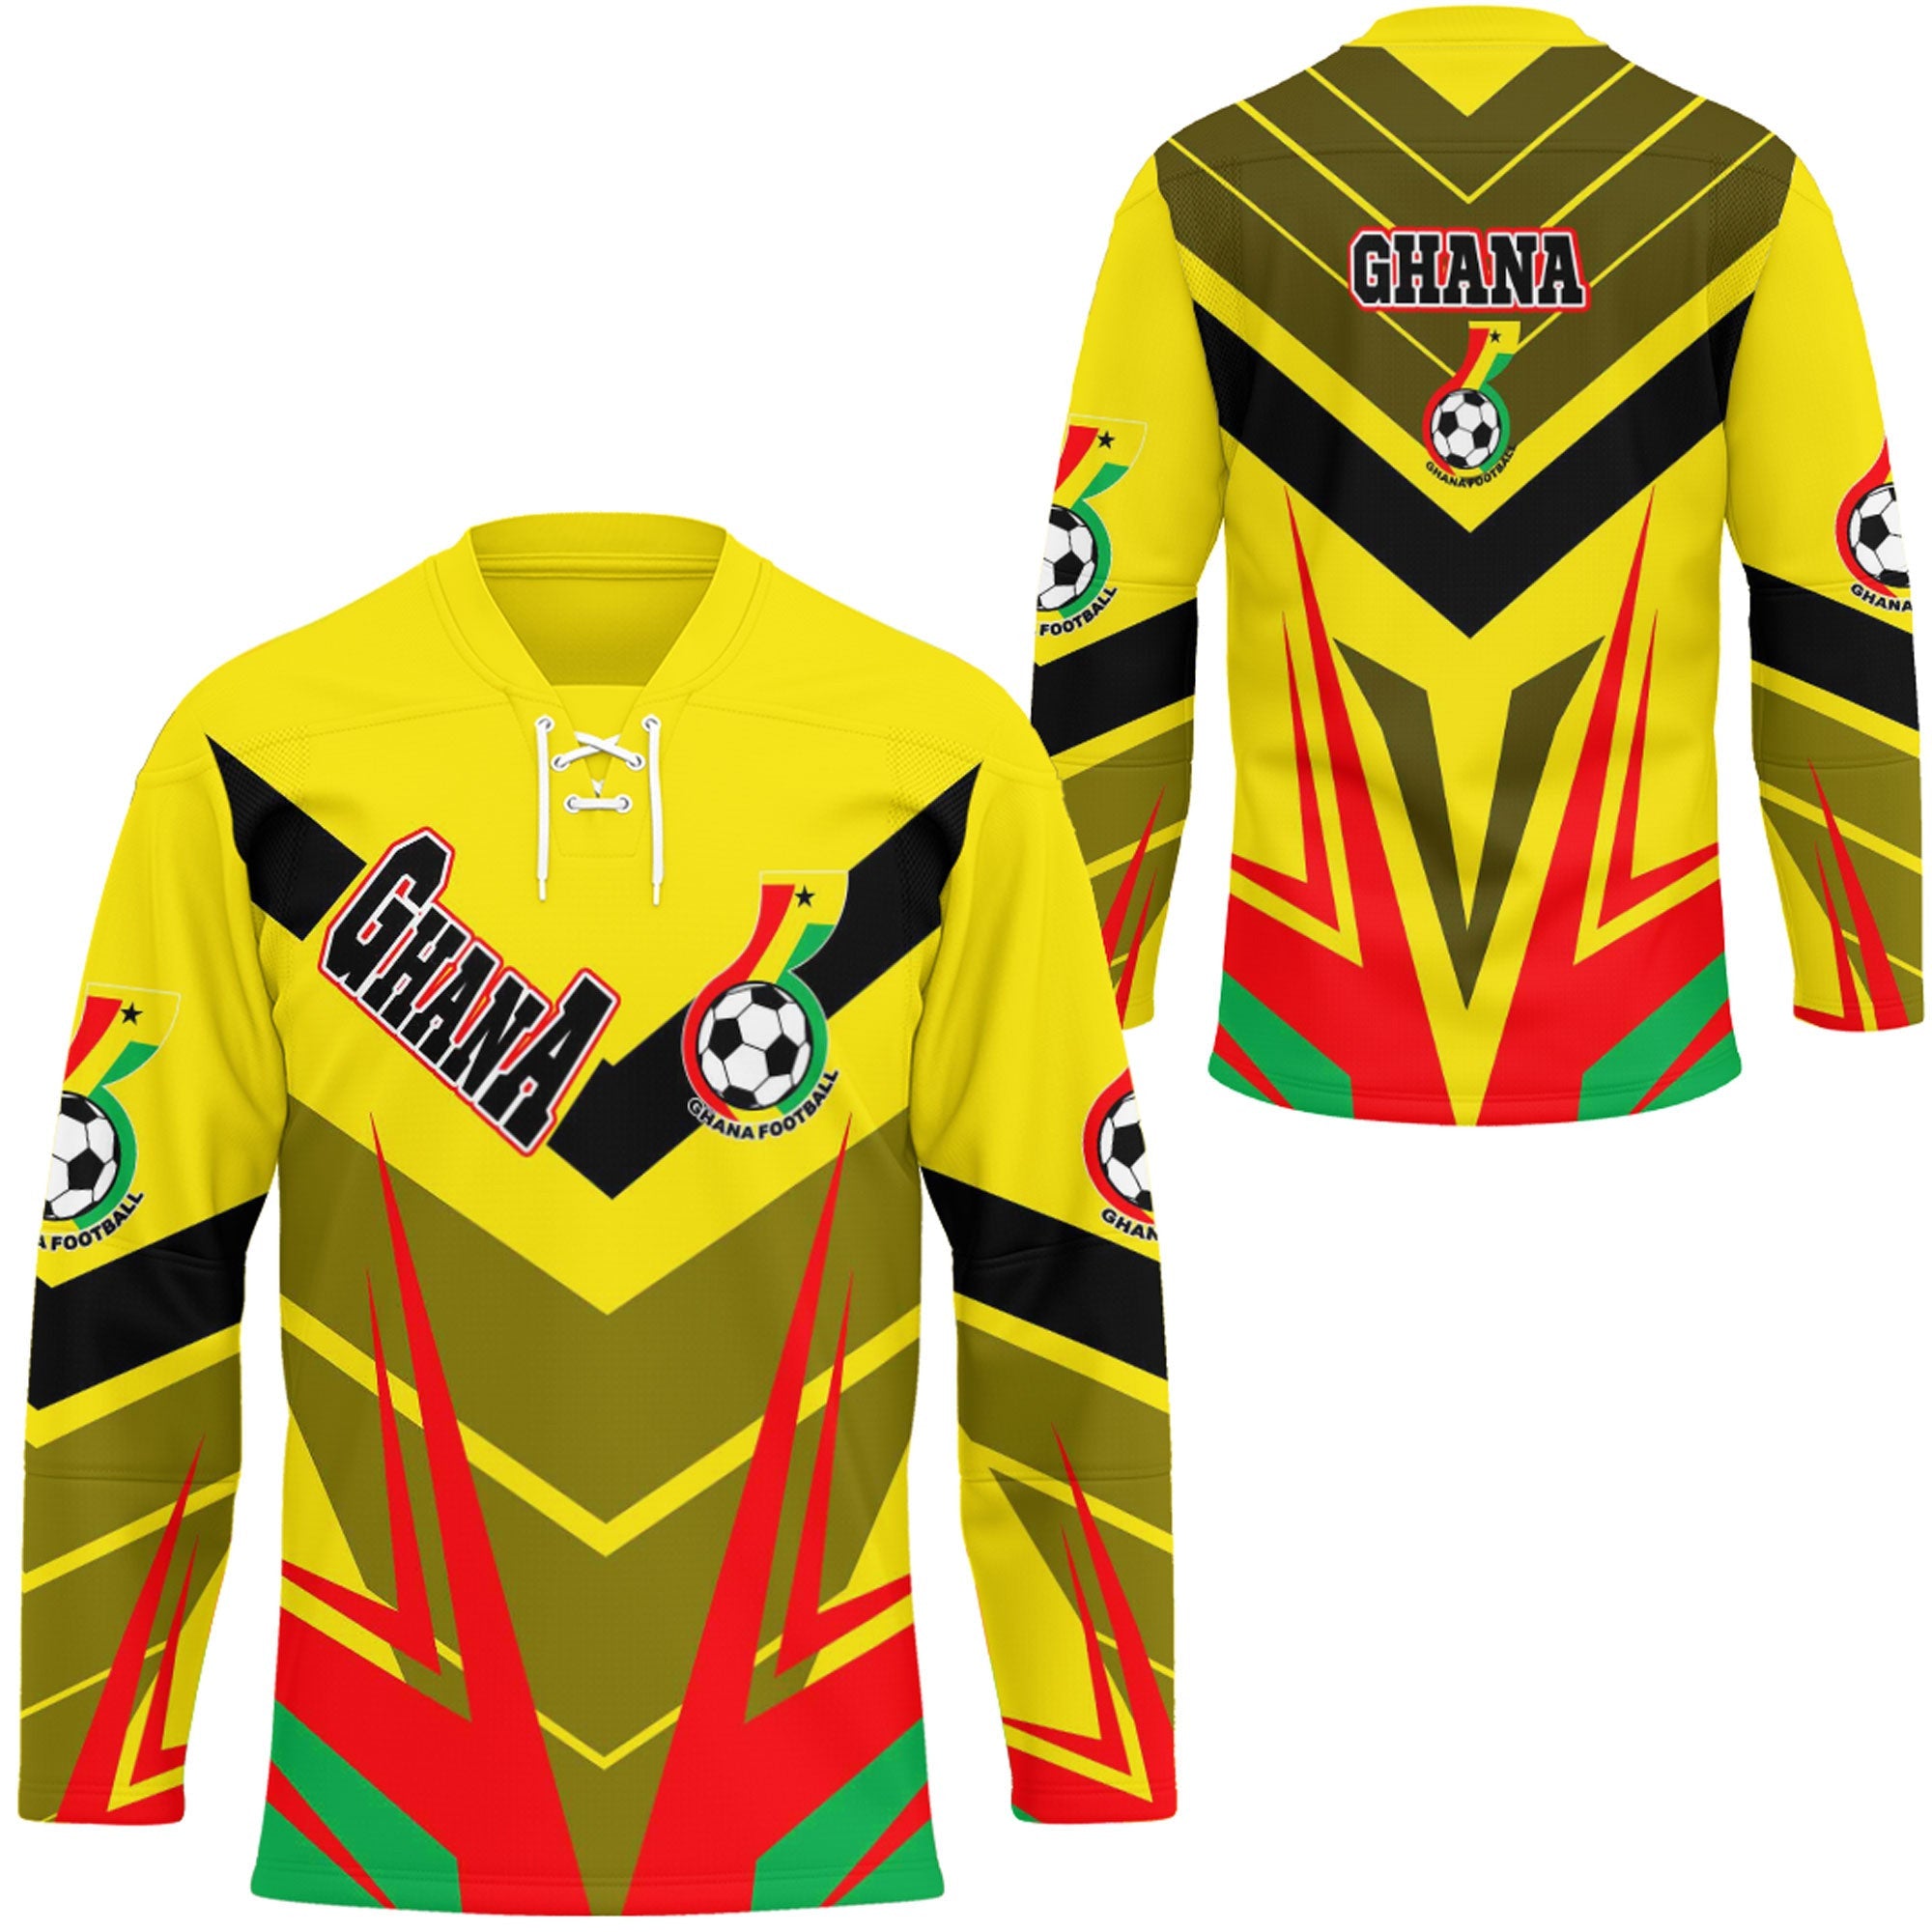 ghana-sporty-style-hockey-jersey